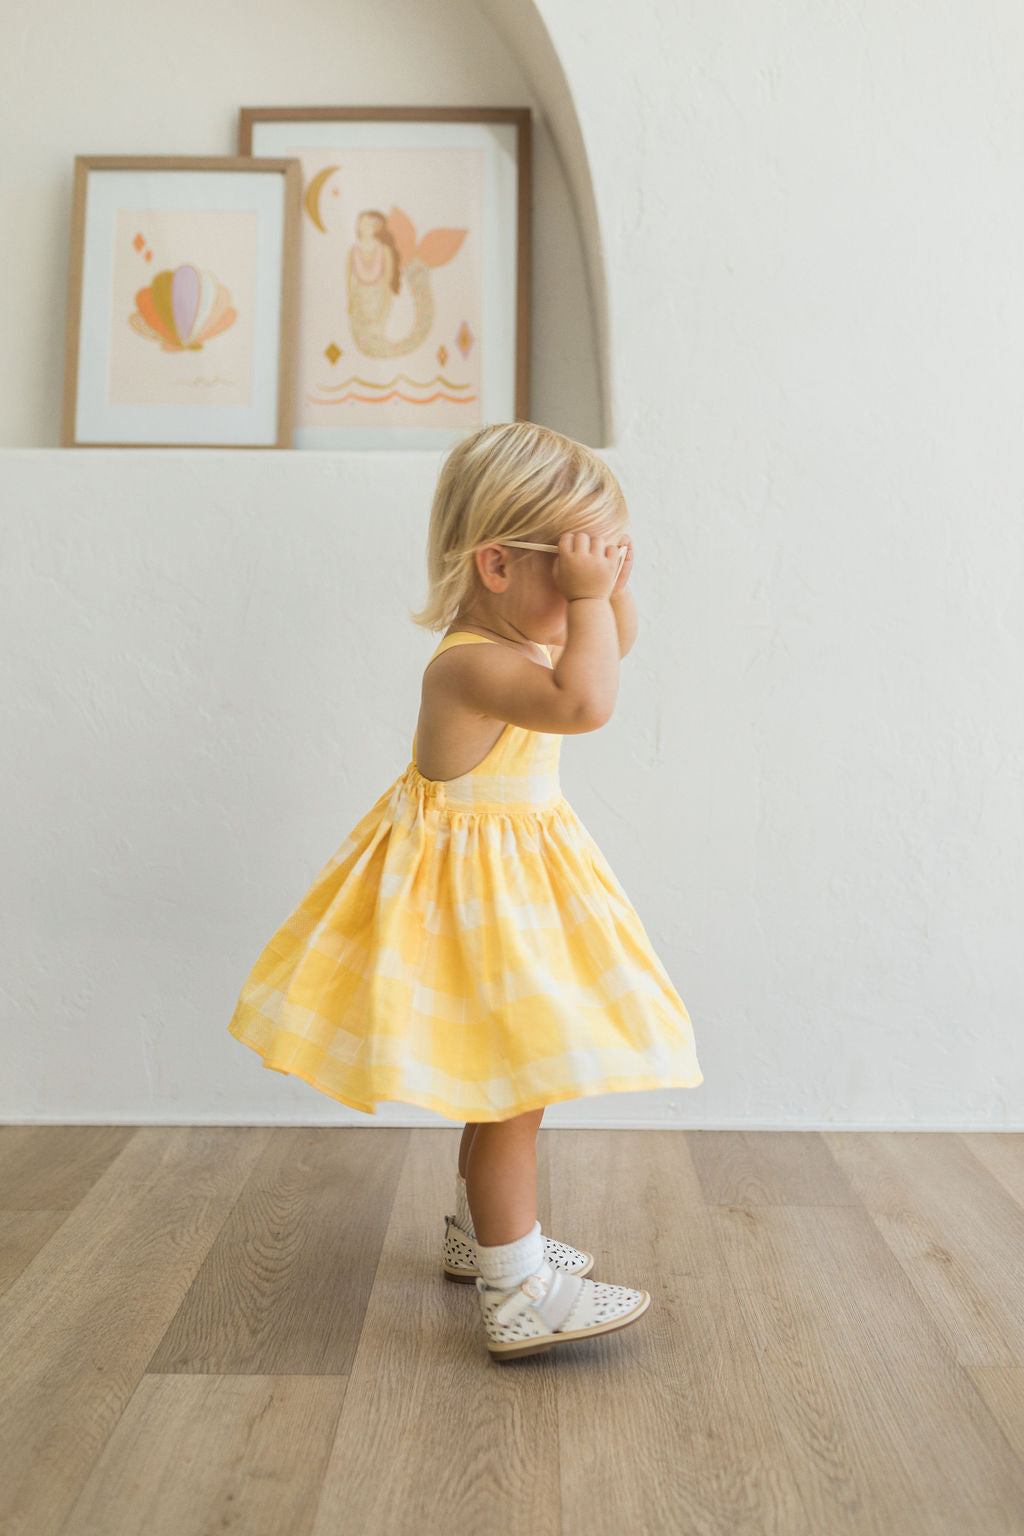 Baby, Toddler & Girls Sandals - Emma White